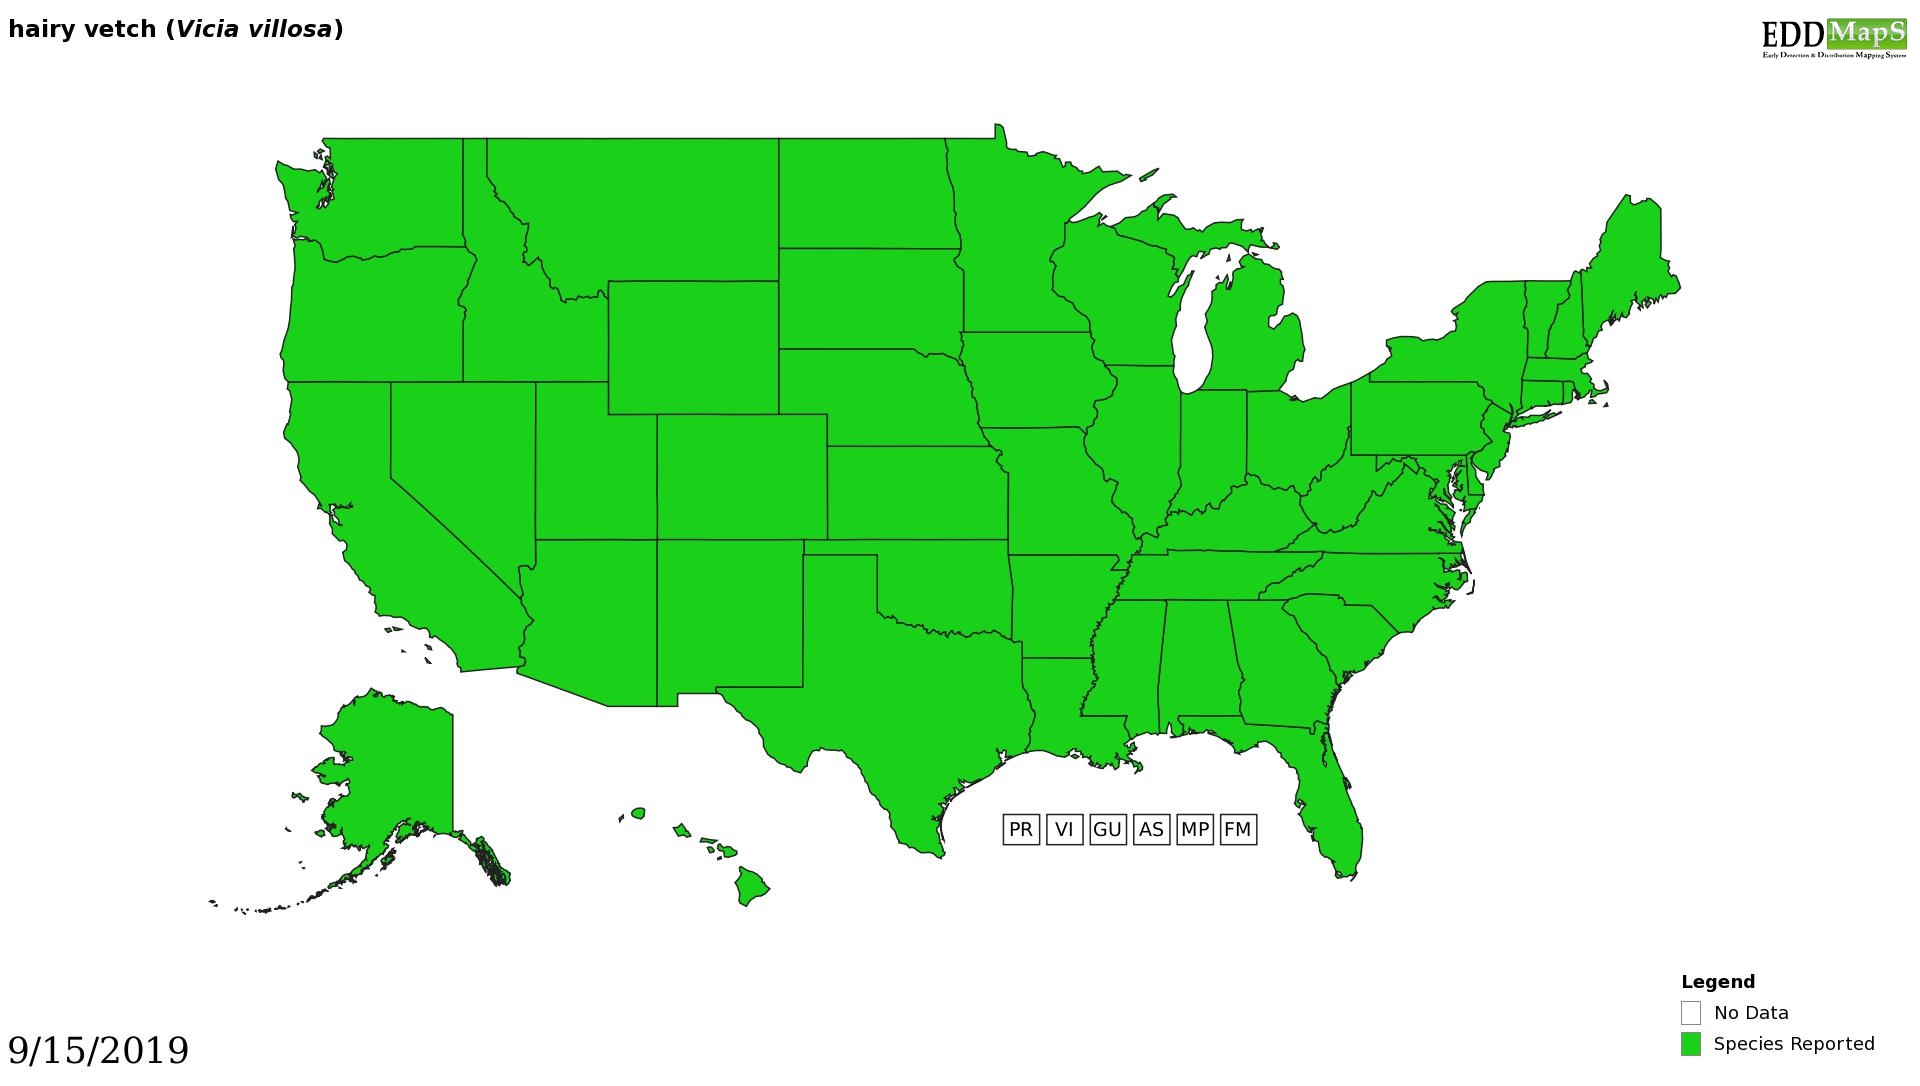 Hairy vetch distribution - United States